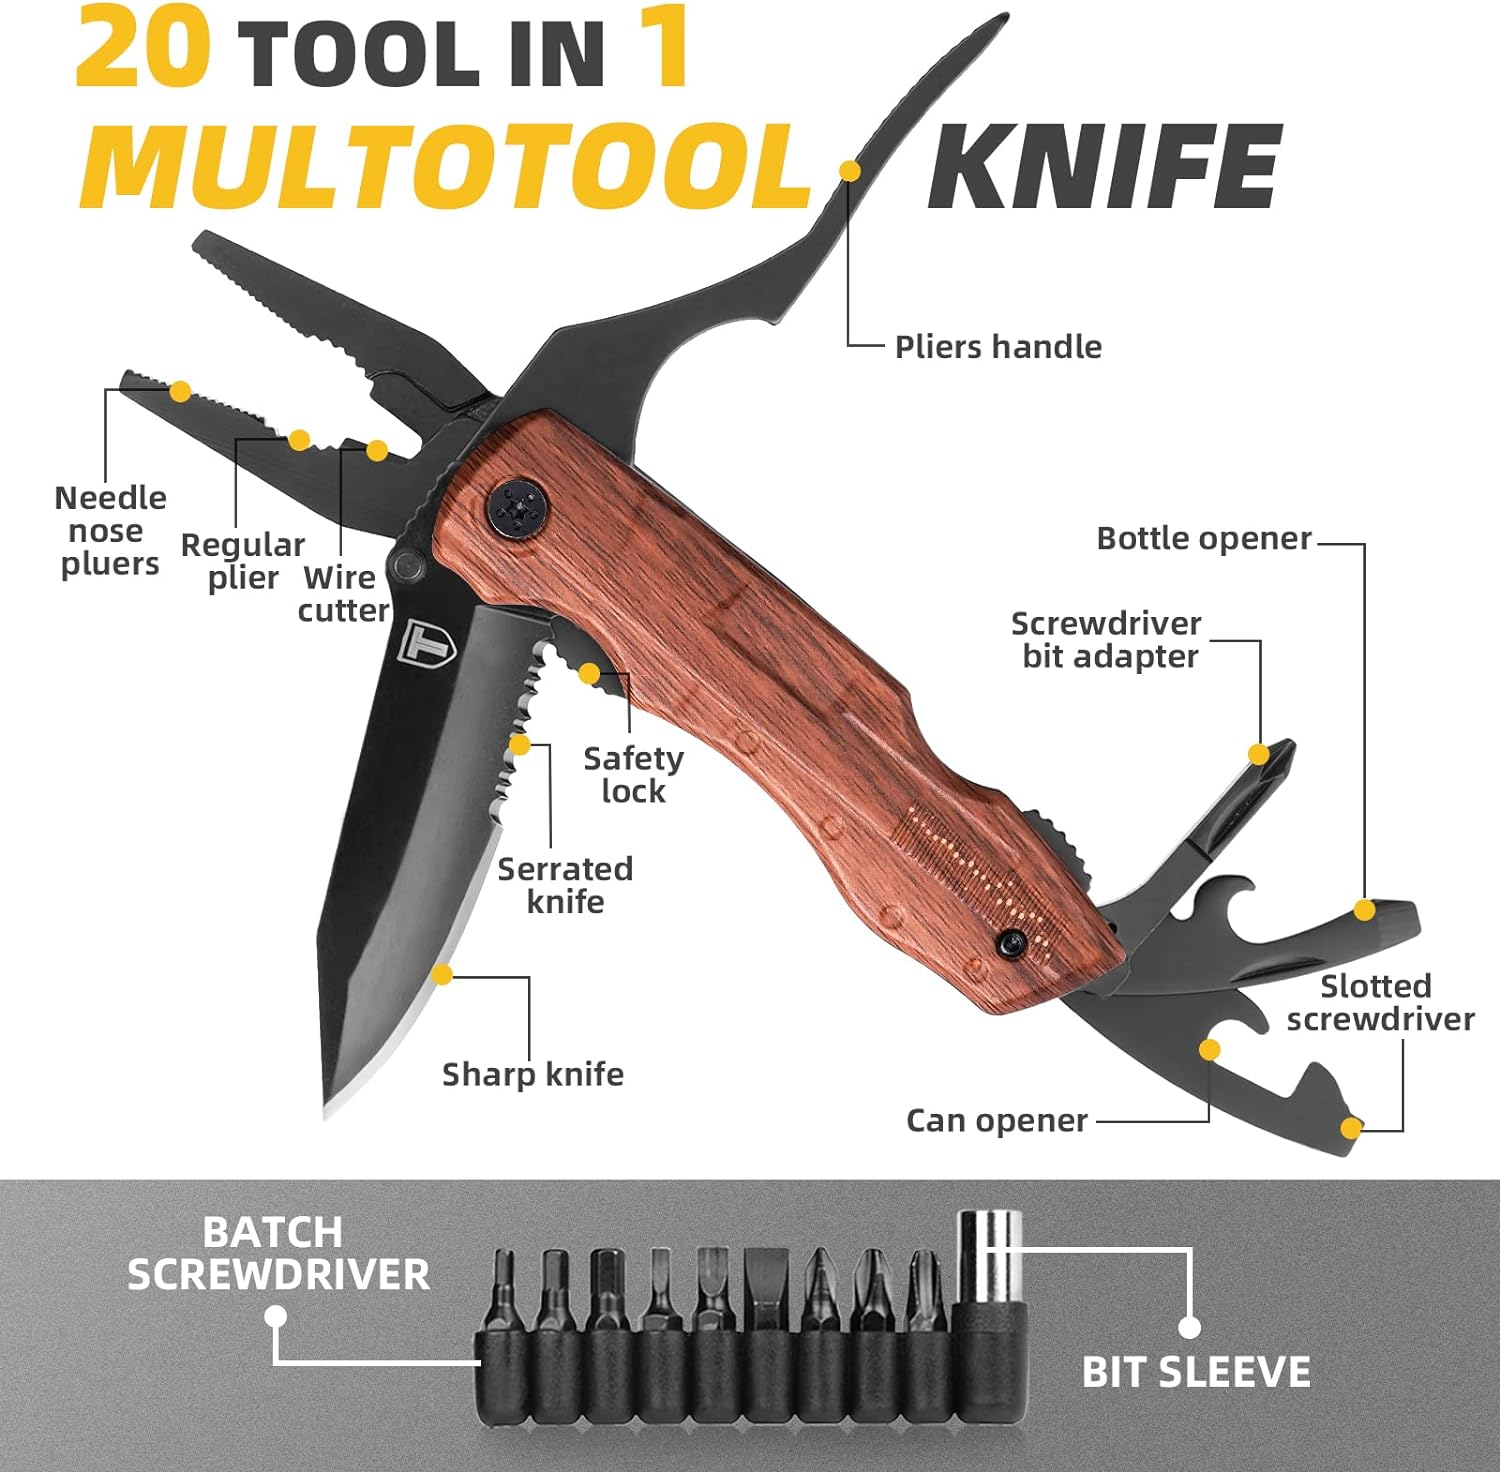 Multitool 13in1 - Multipurpose Tools Set with Pliers Knife Screwdriver  Sheath - Multi Tool Wood Metal Tactical Pocket Multifunctional Kit Multi- tool - Best for …